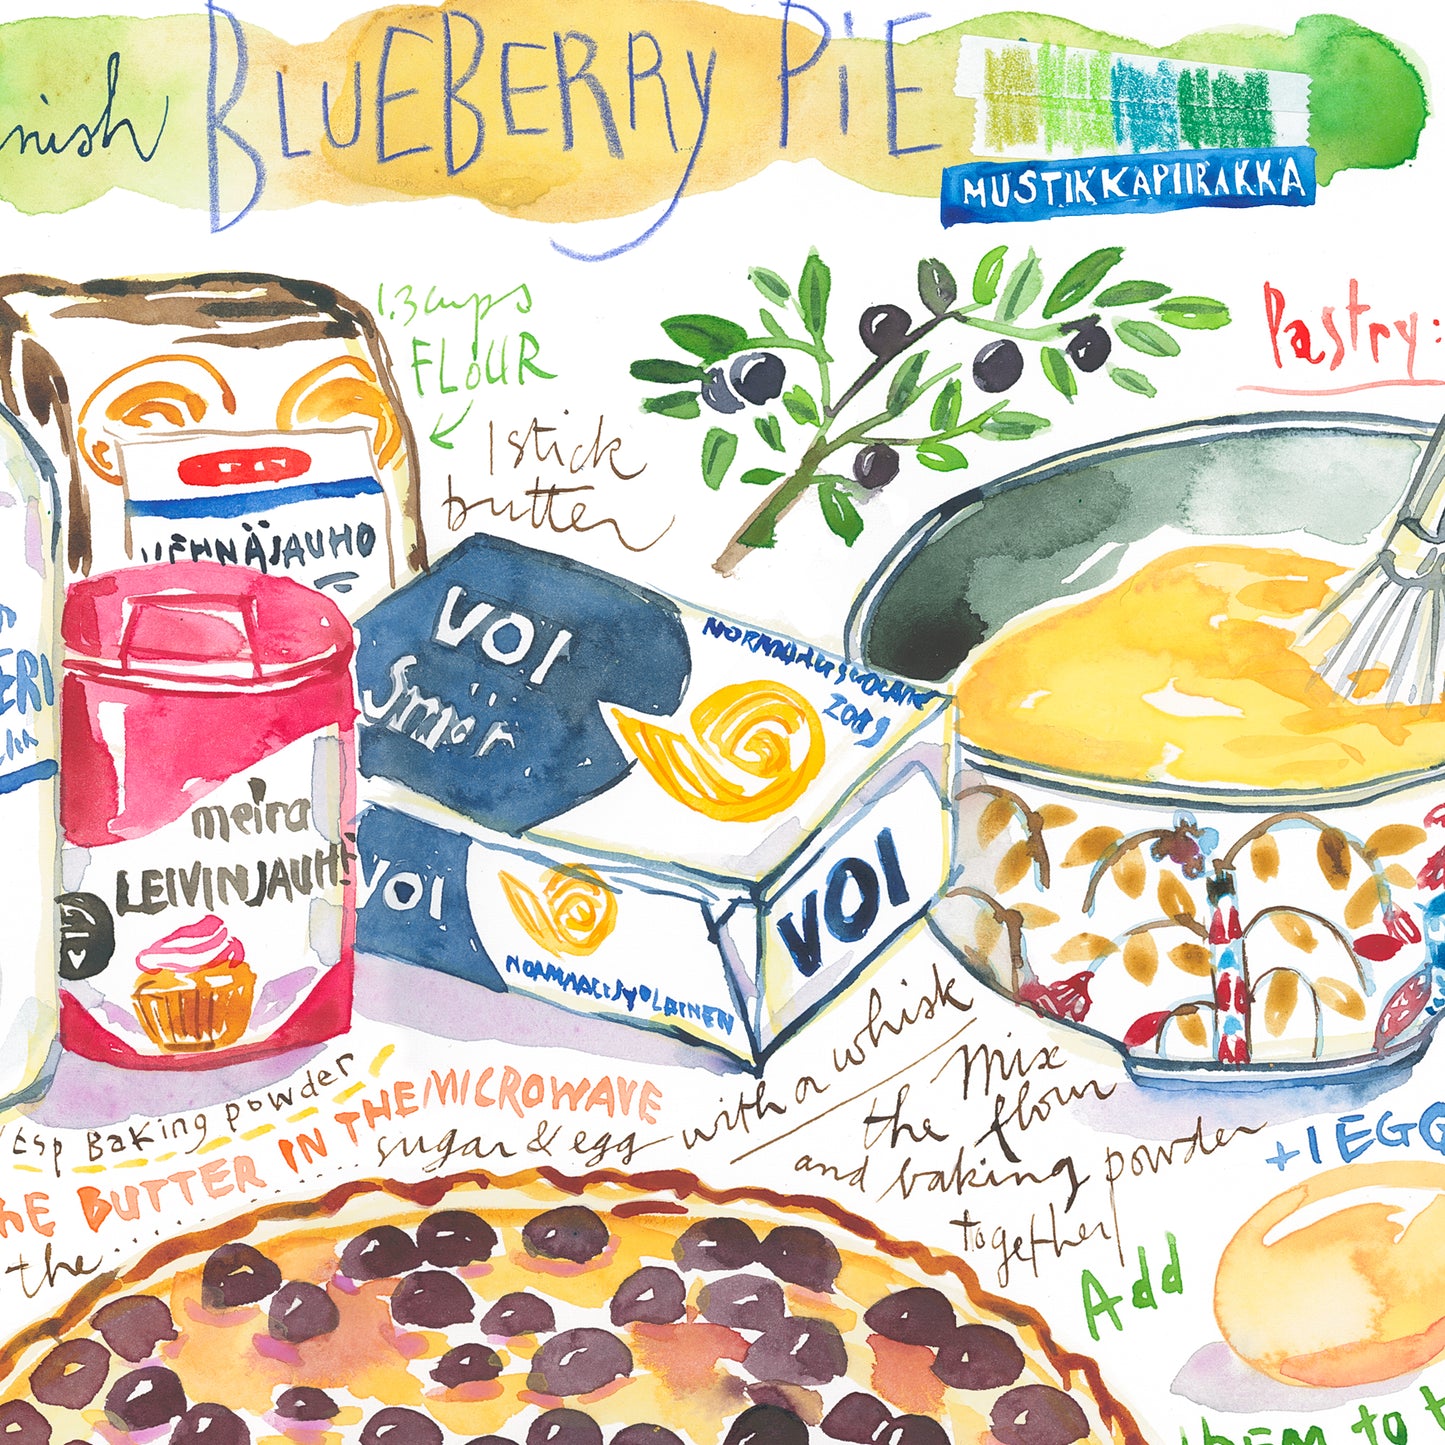 Finnish Blueberry Pie recipe